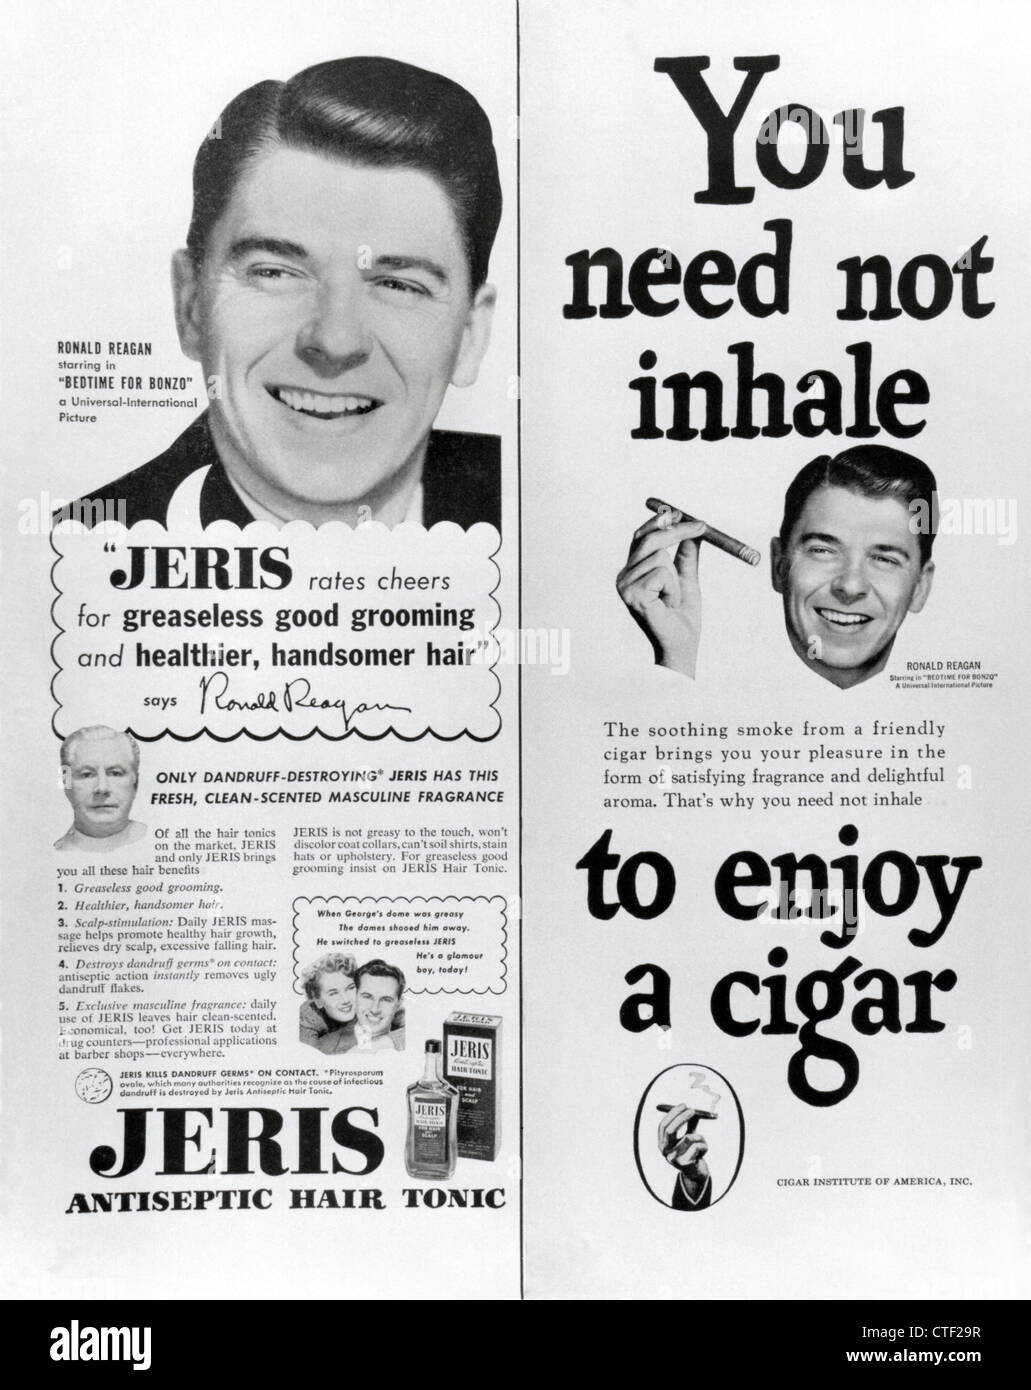 2 magazine ads showing Ronald Reagan endorsing hair tonic and cigar smoking, 1951. Stock Photo